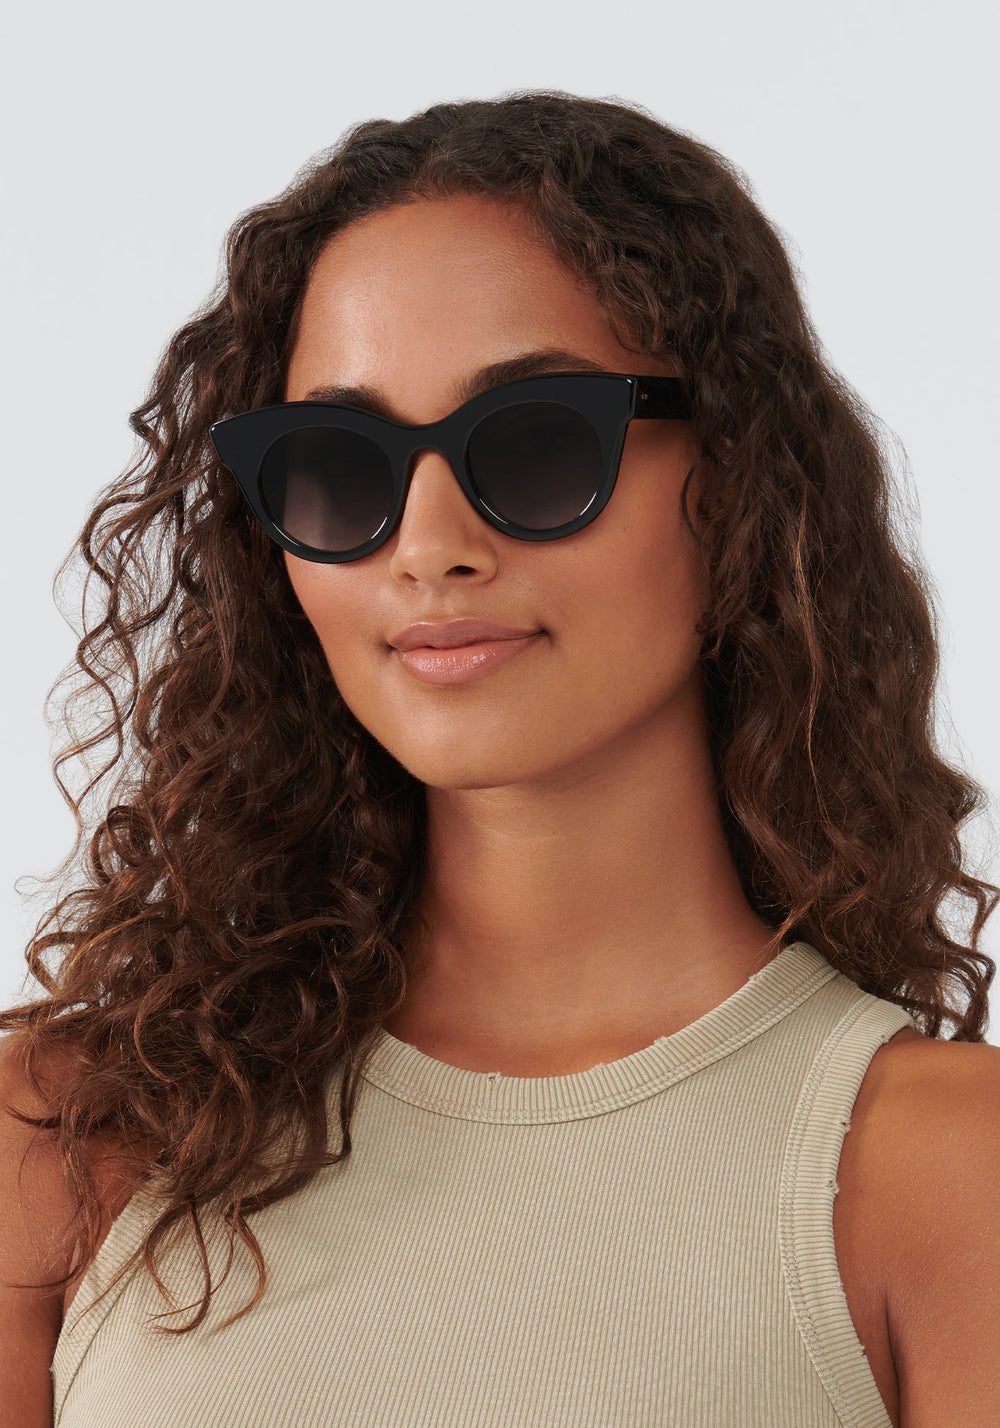 KREWE - OLIVIA | Black + Black and Crystal handcrafted, luxury black cat-eye sunglasses womens model | Model: Meli